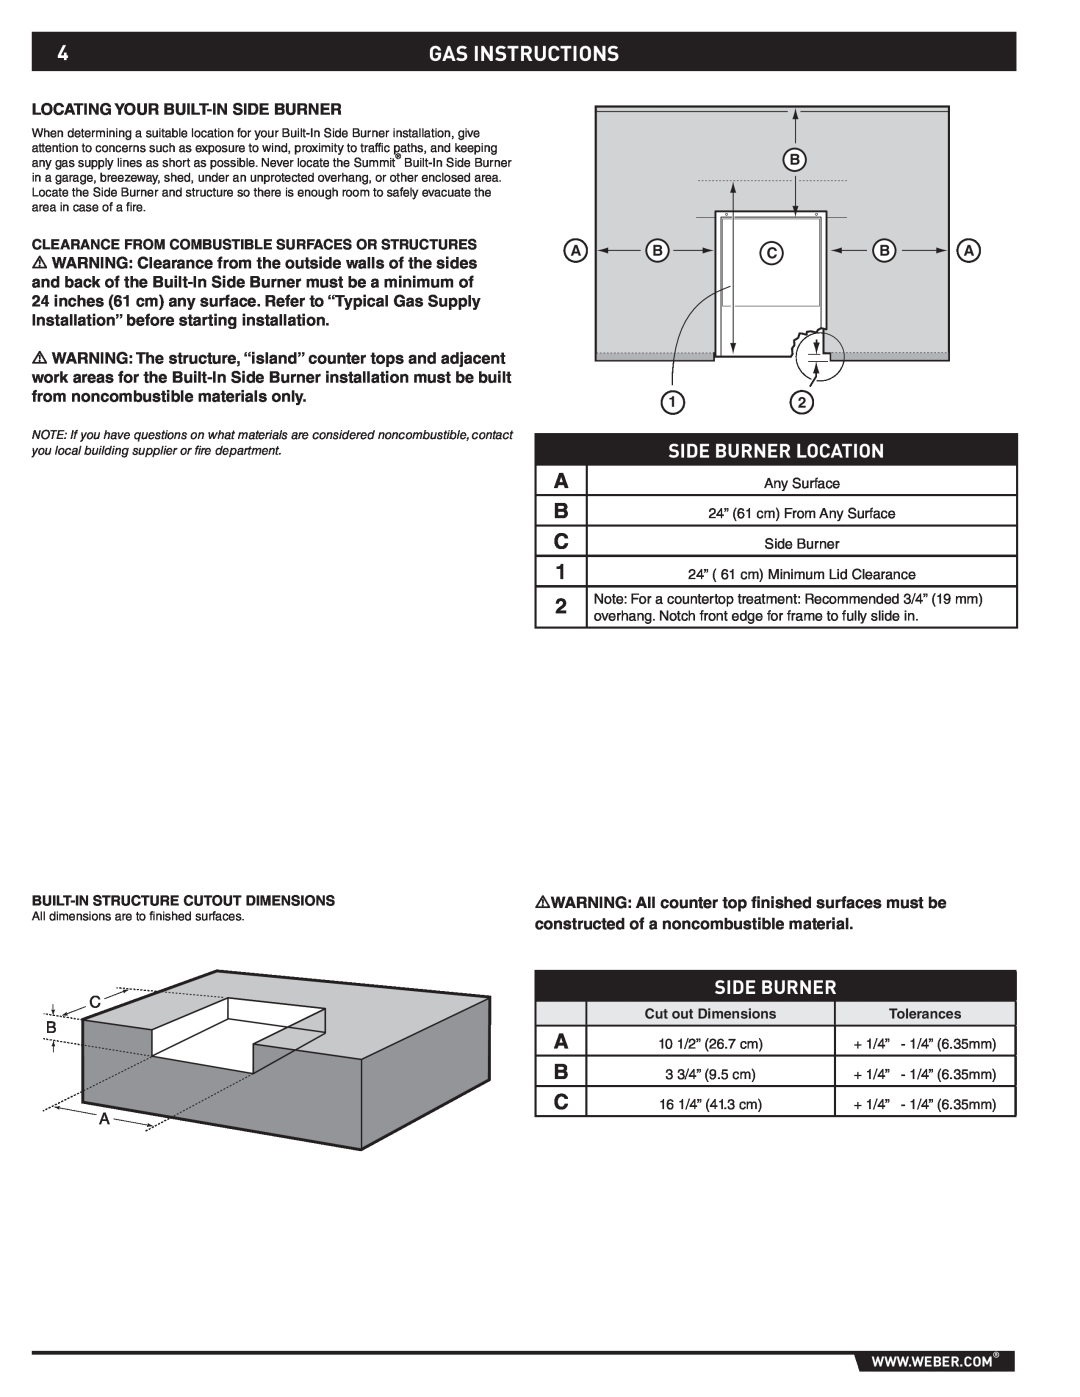 Weber 89796 manual Gas Instructions, A B C, Side Burner Location 